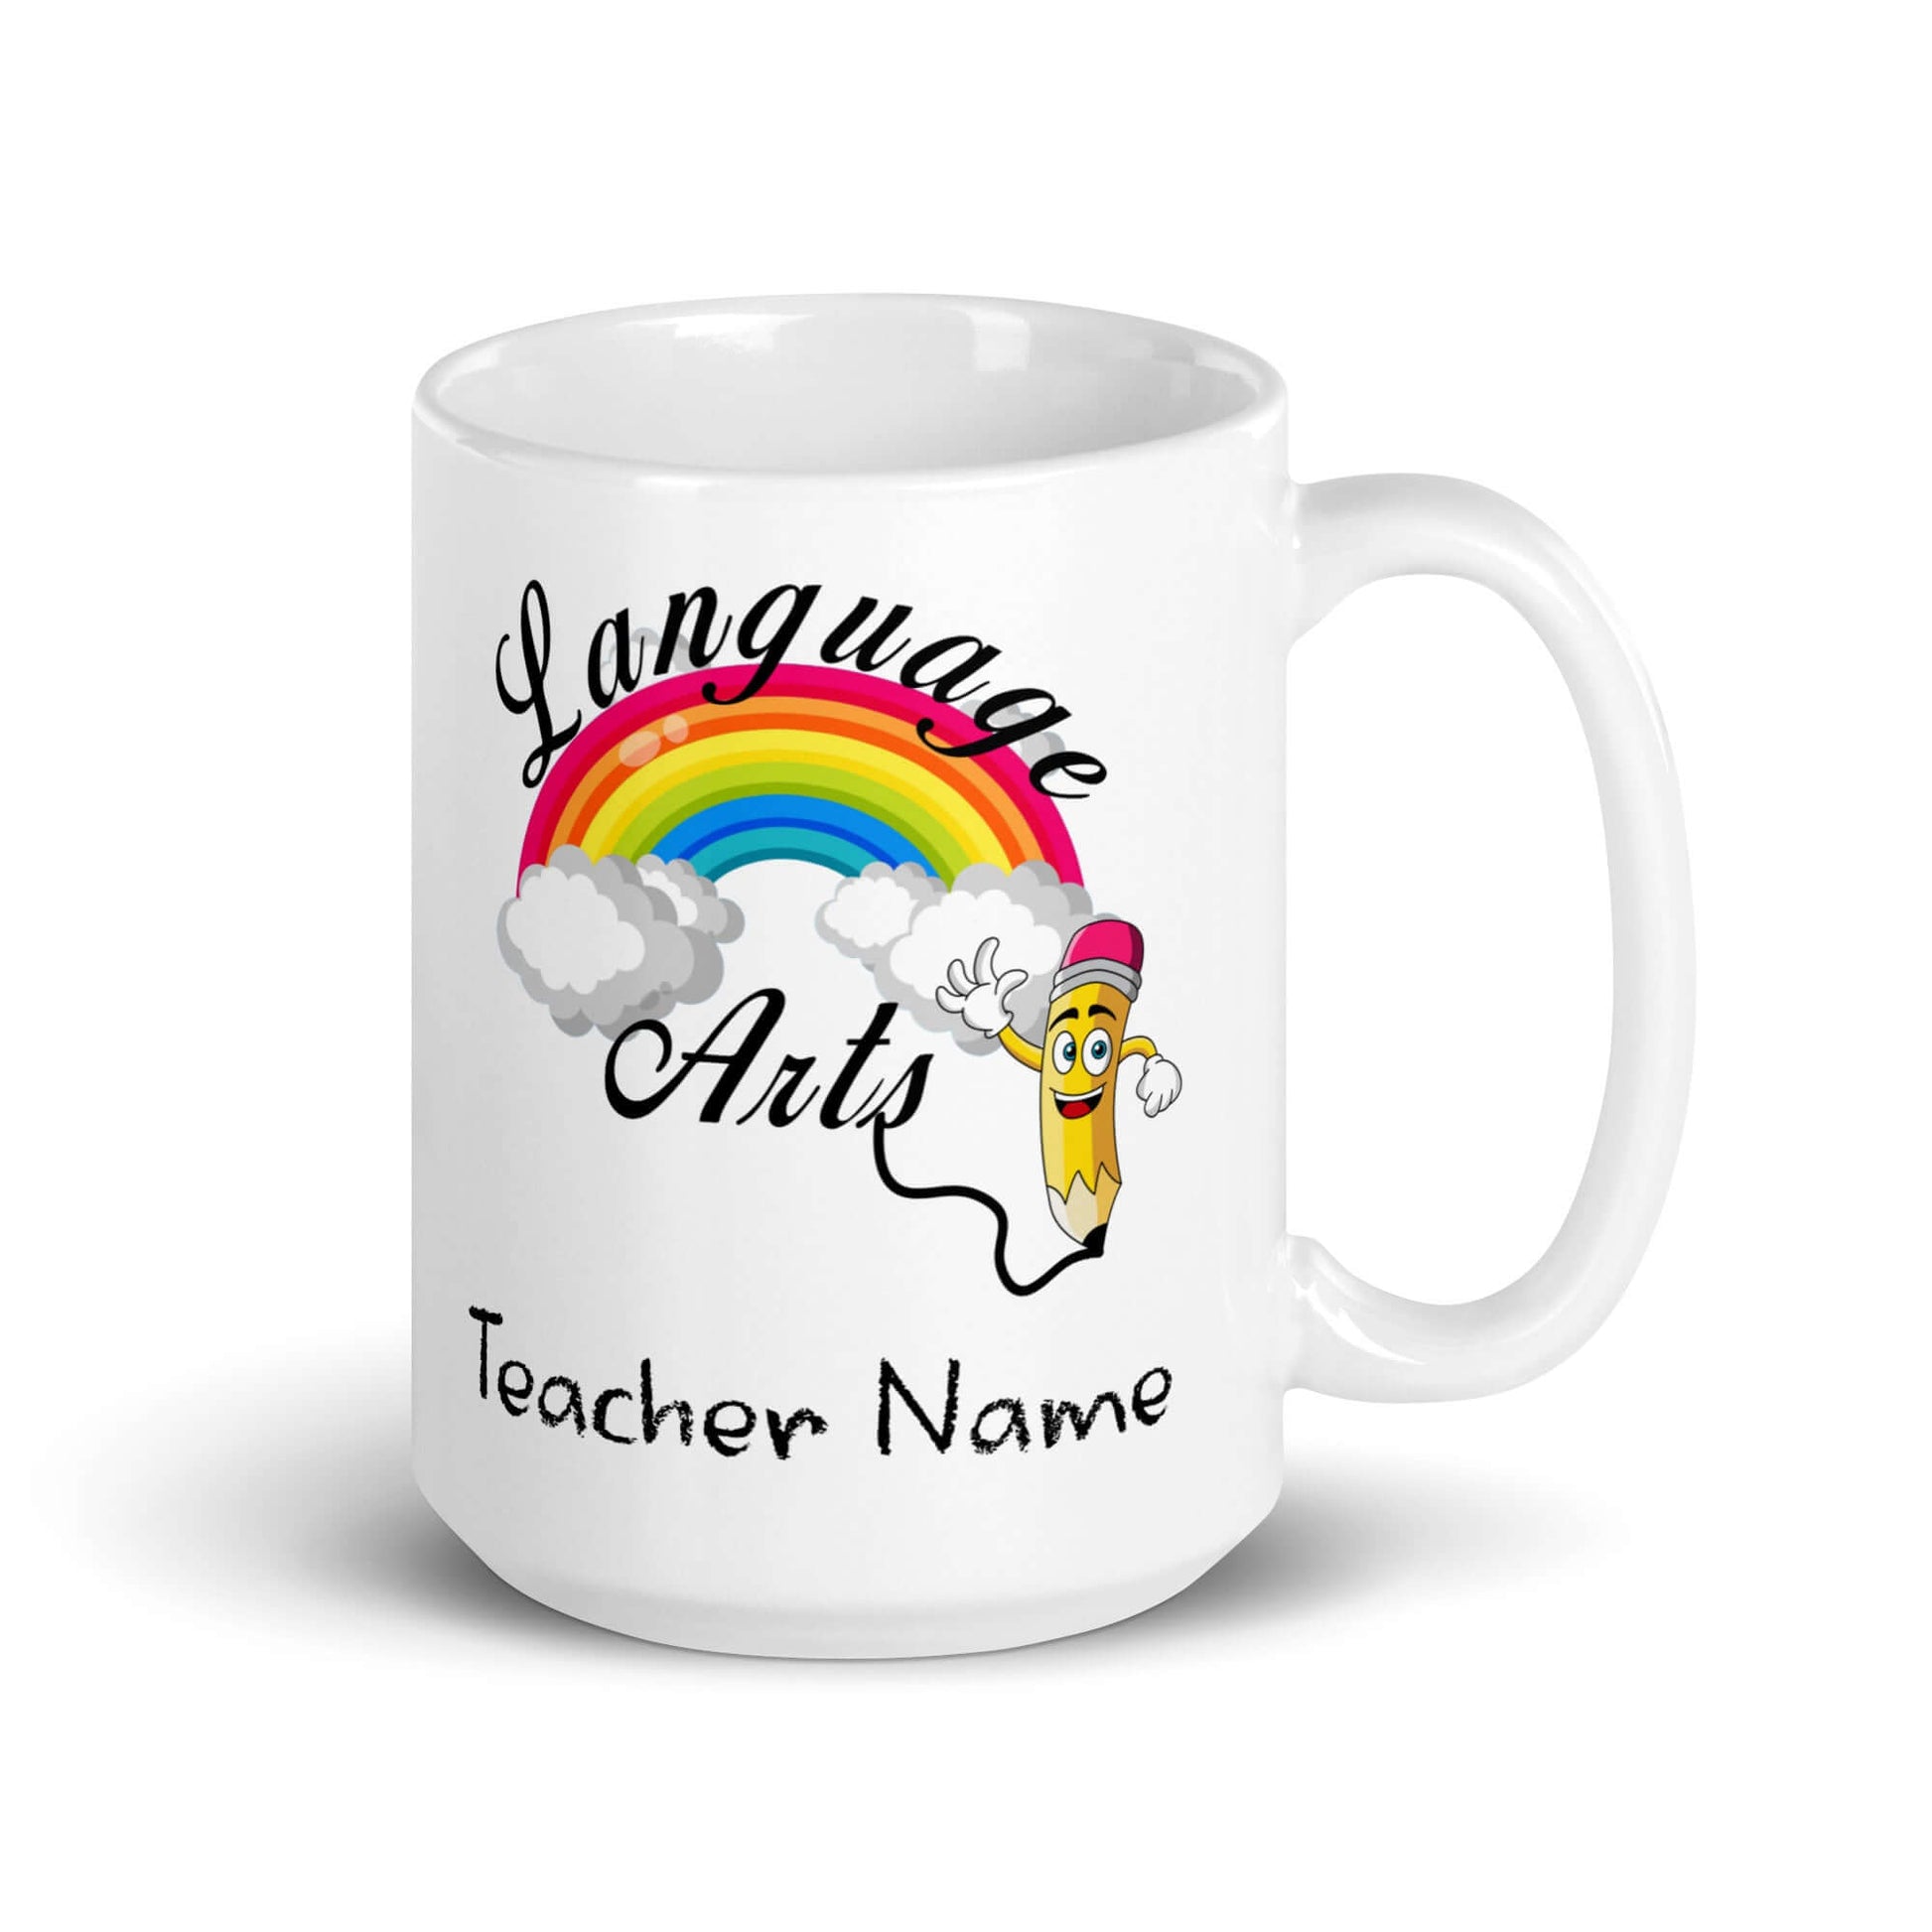 Language Arts Teacher - White glossy mug - Horrible Designs